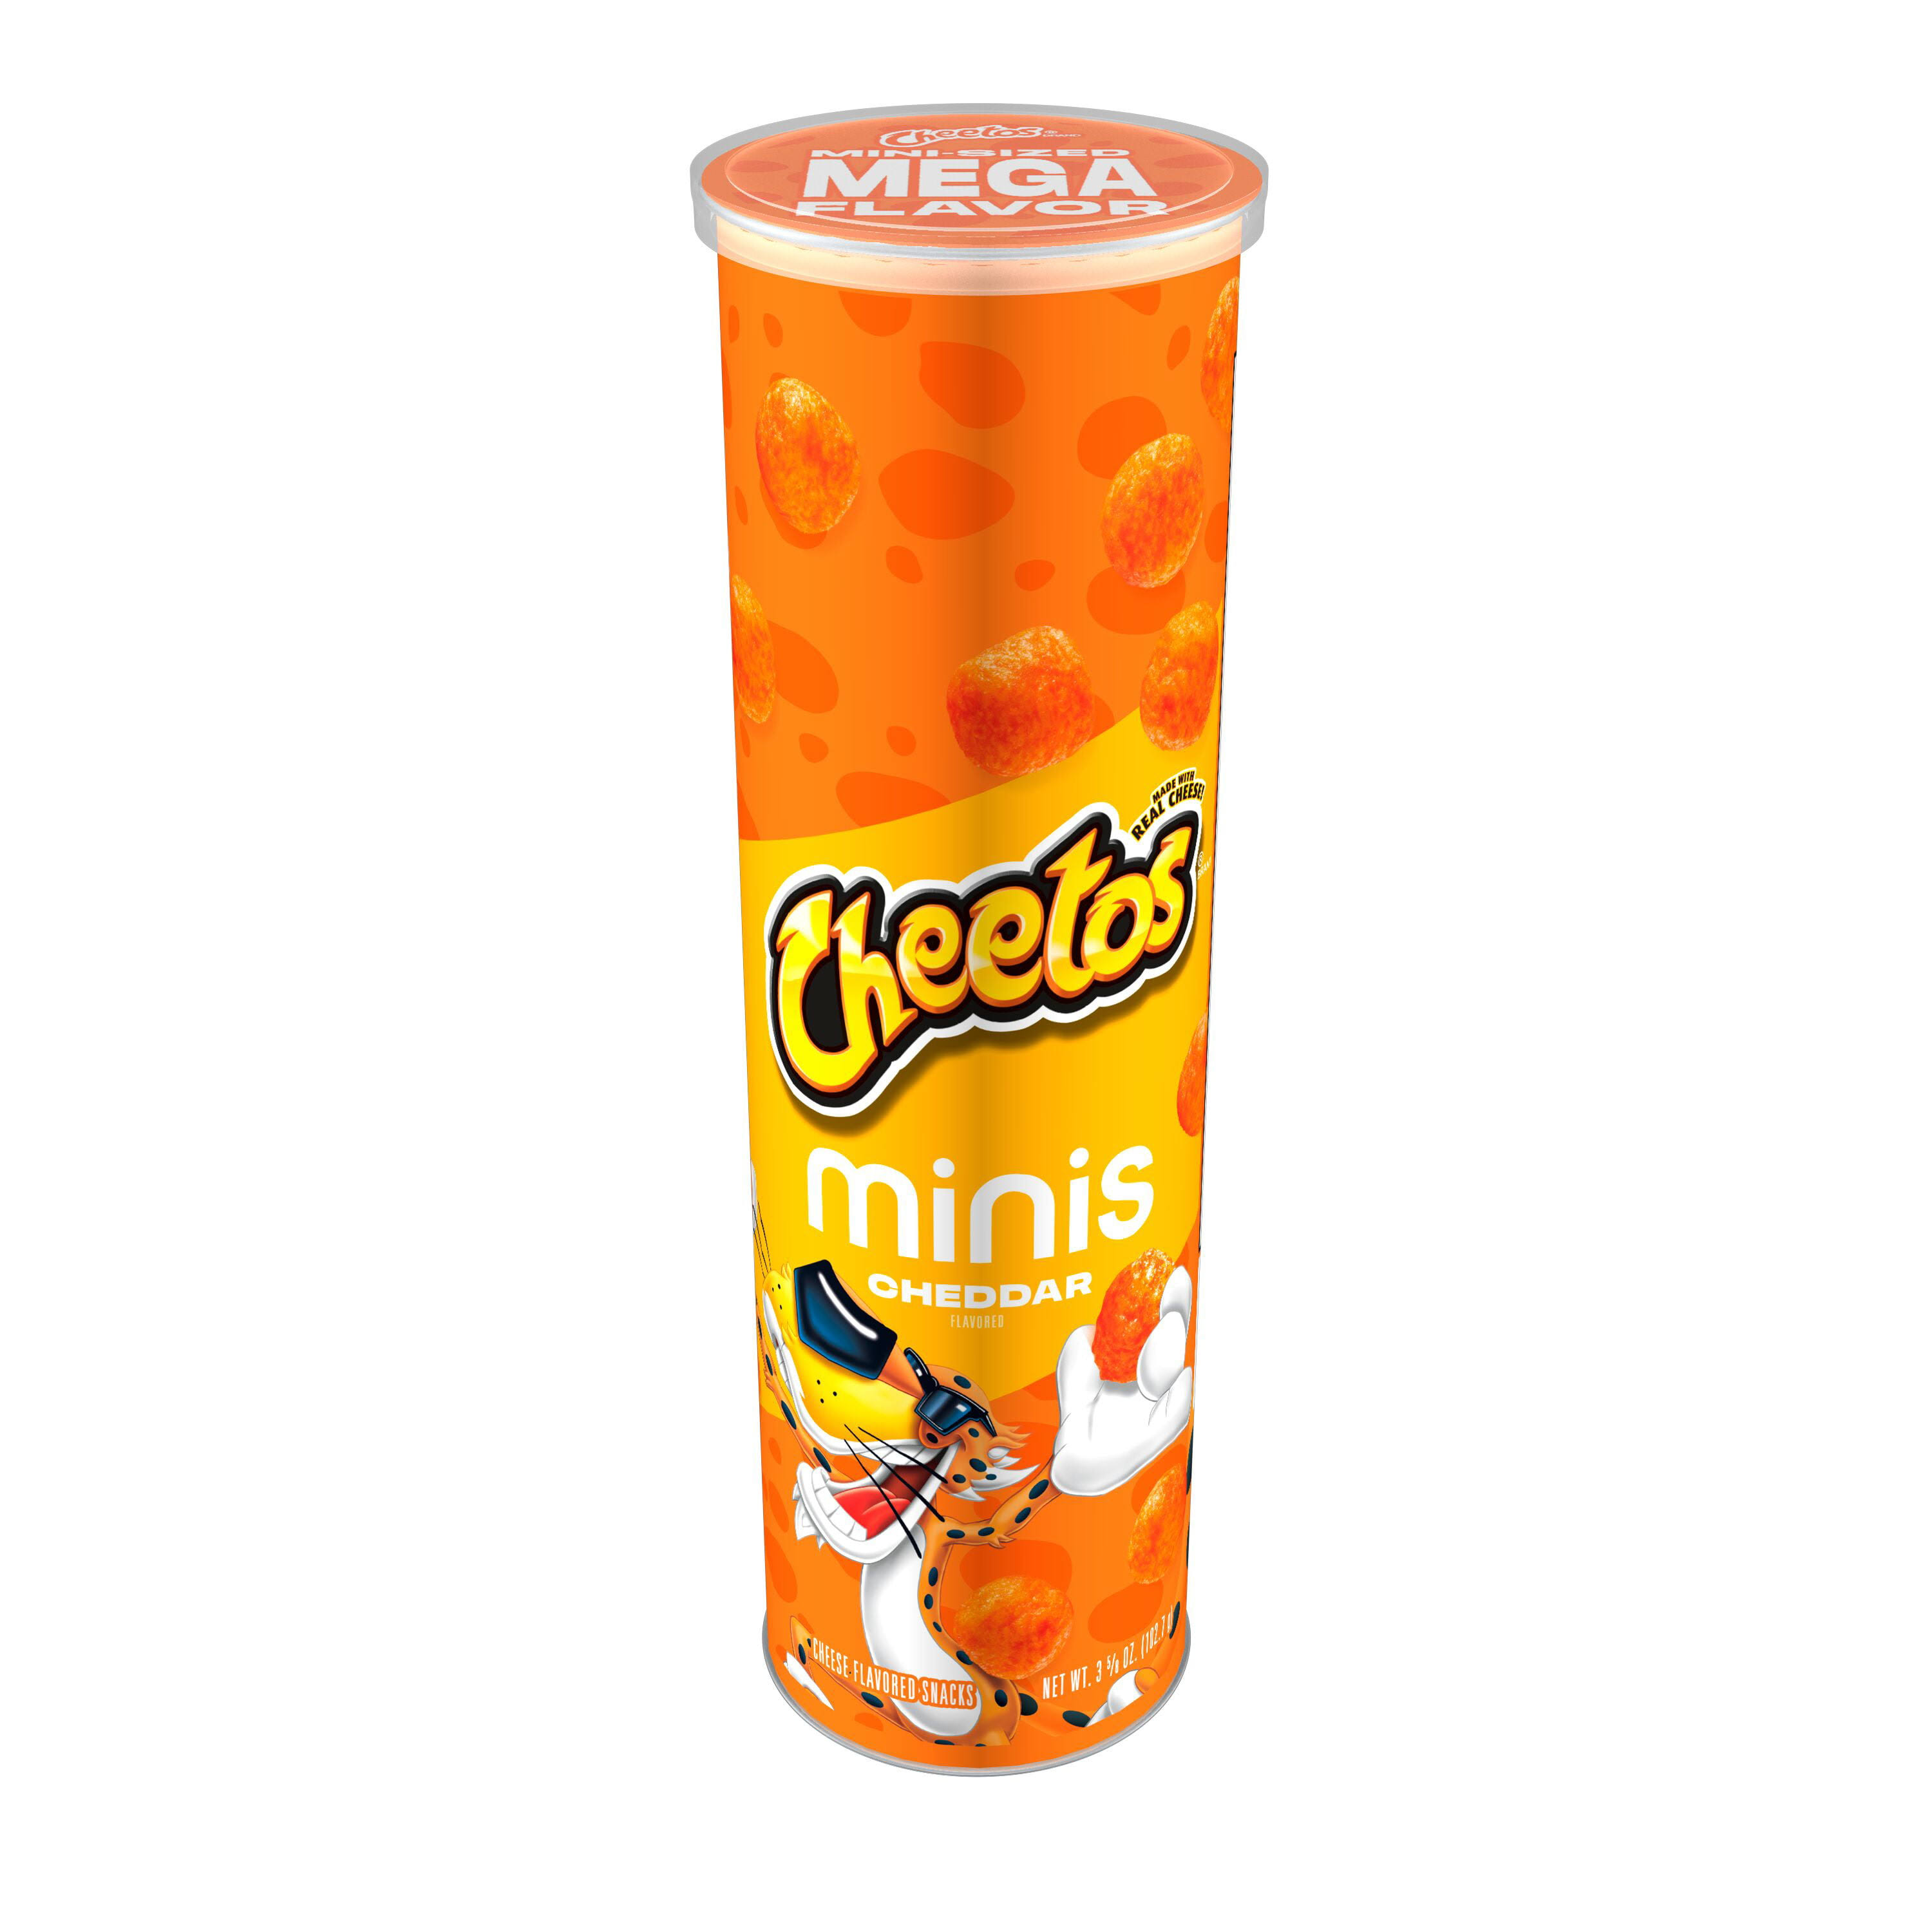 Cheetos - Minis Cheddar